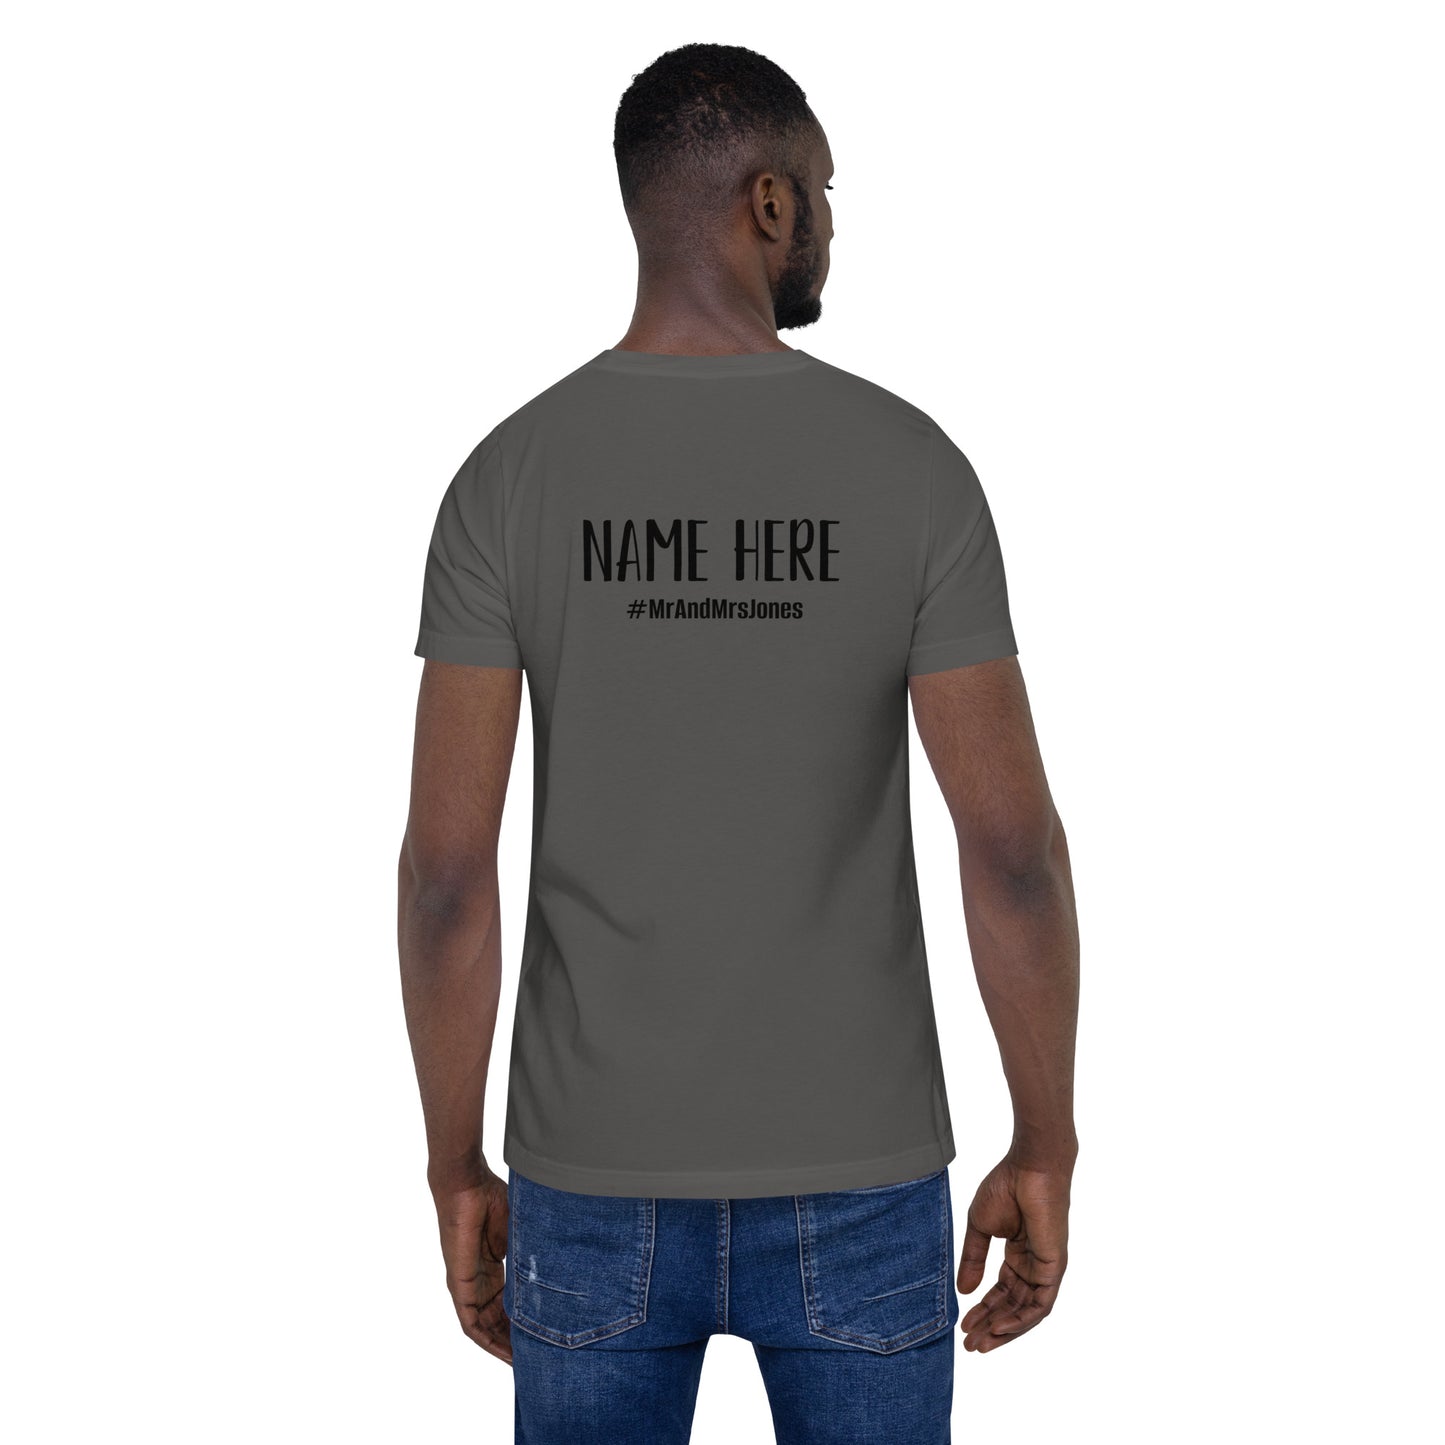 "Grooms Man" Customizable Unisex T-shirt (Black Print)